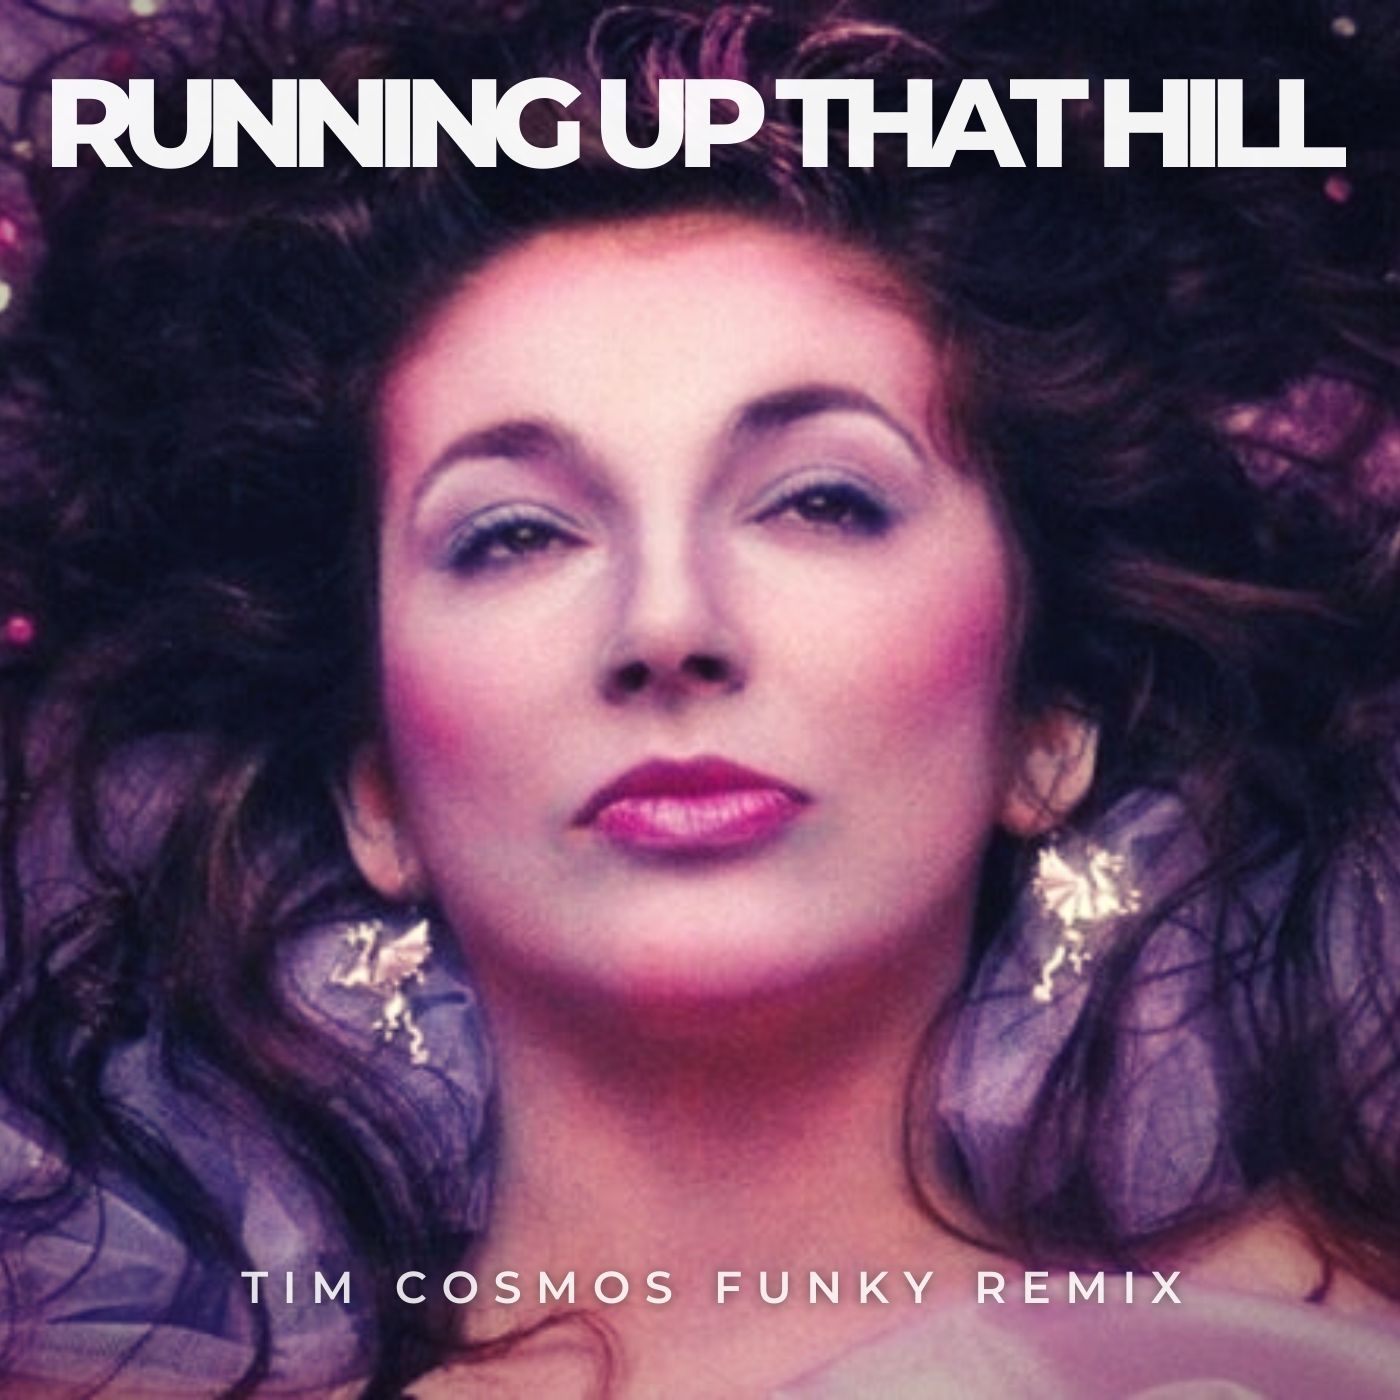 Landa Kate Bush - Running Up That Hill (Tim Cosmos Funky Remix) [HYPEDDIT #01 NUDISCO CHART]